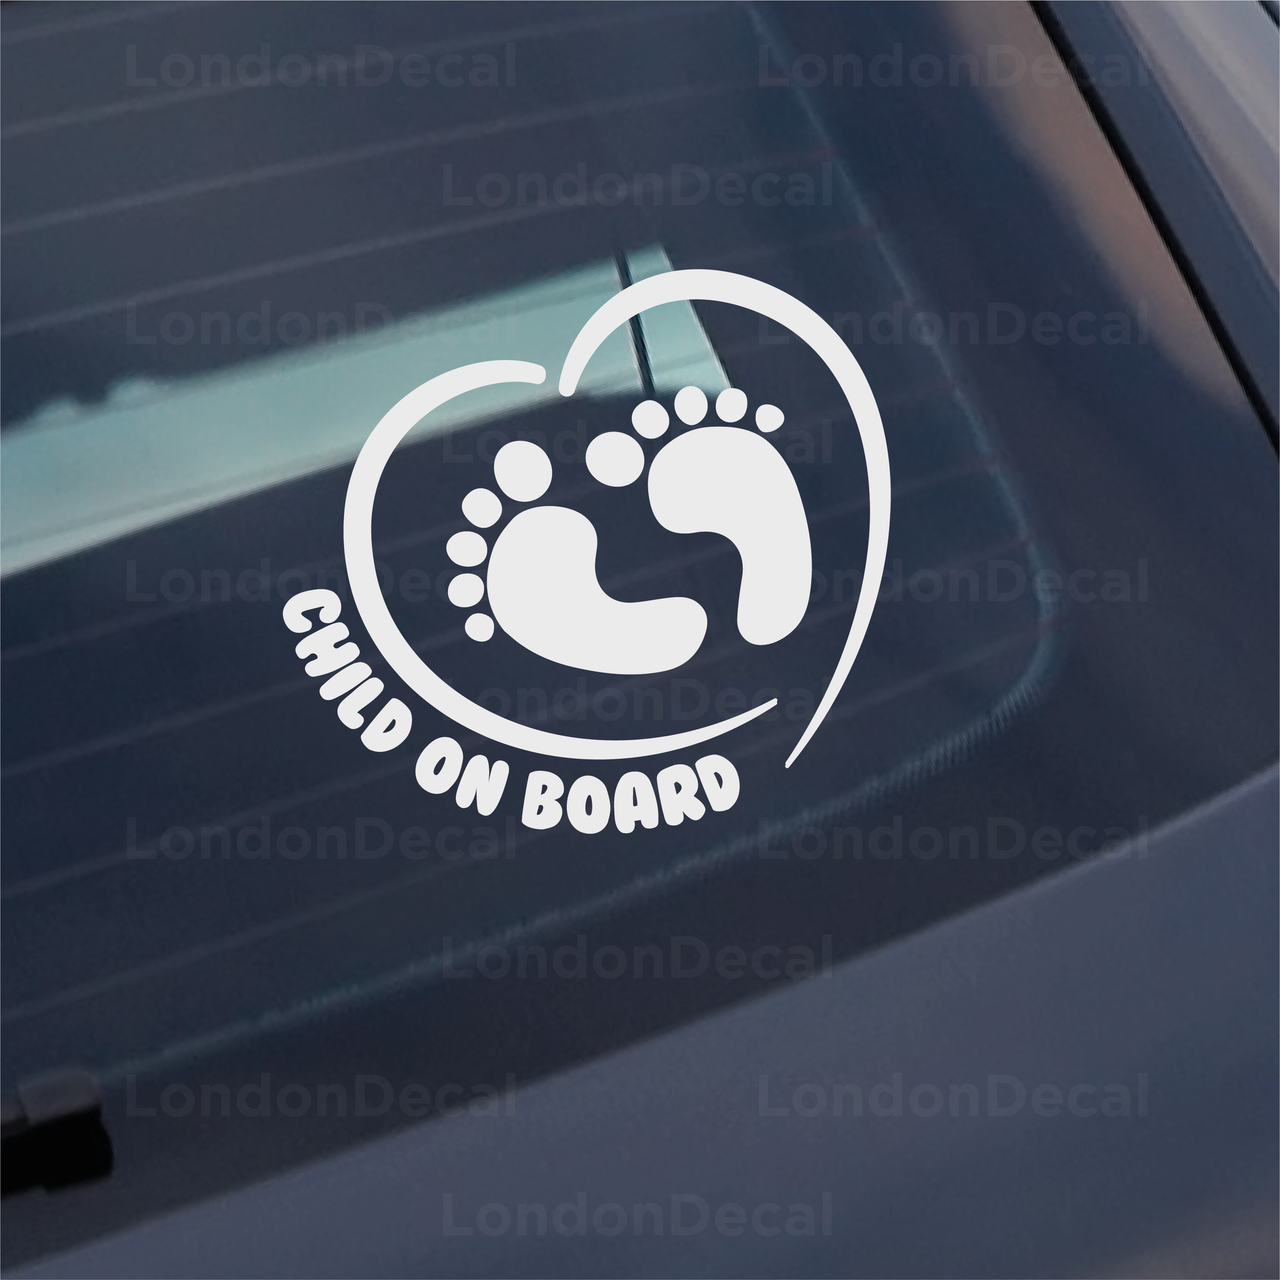 Child On Board Car Decal - Footprints